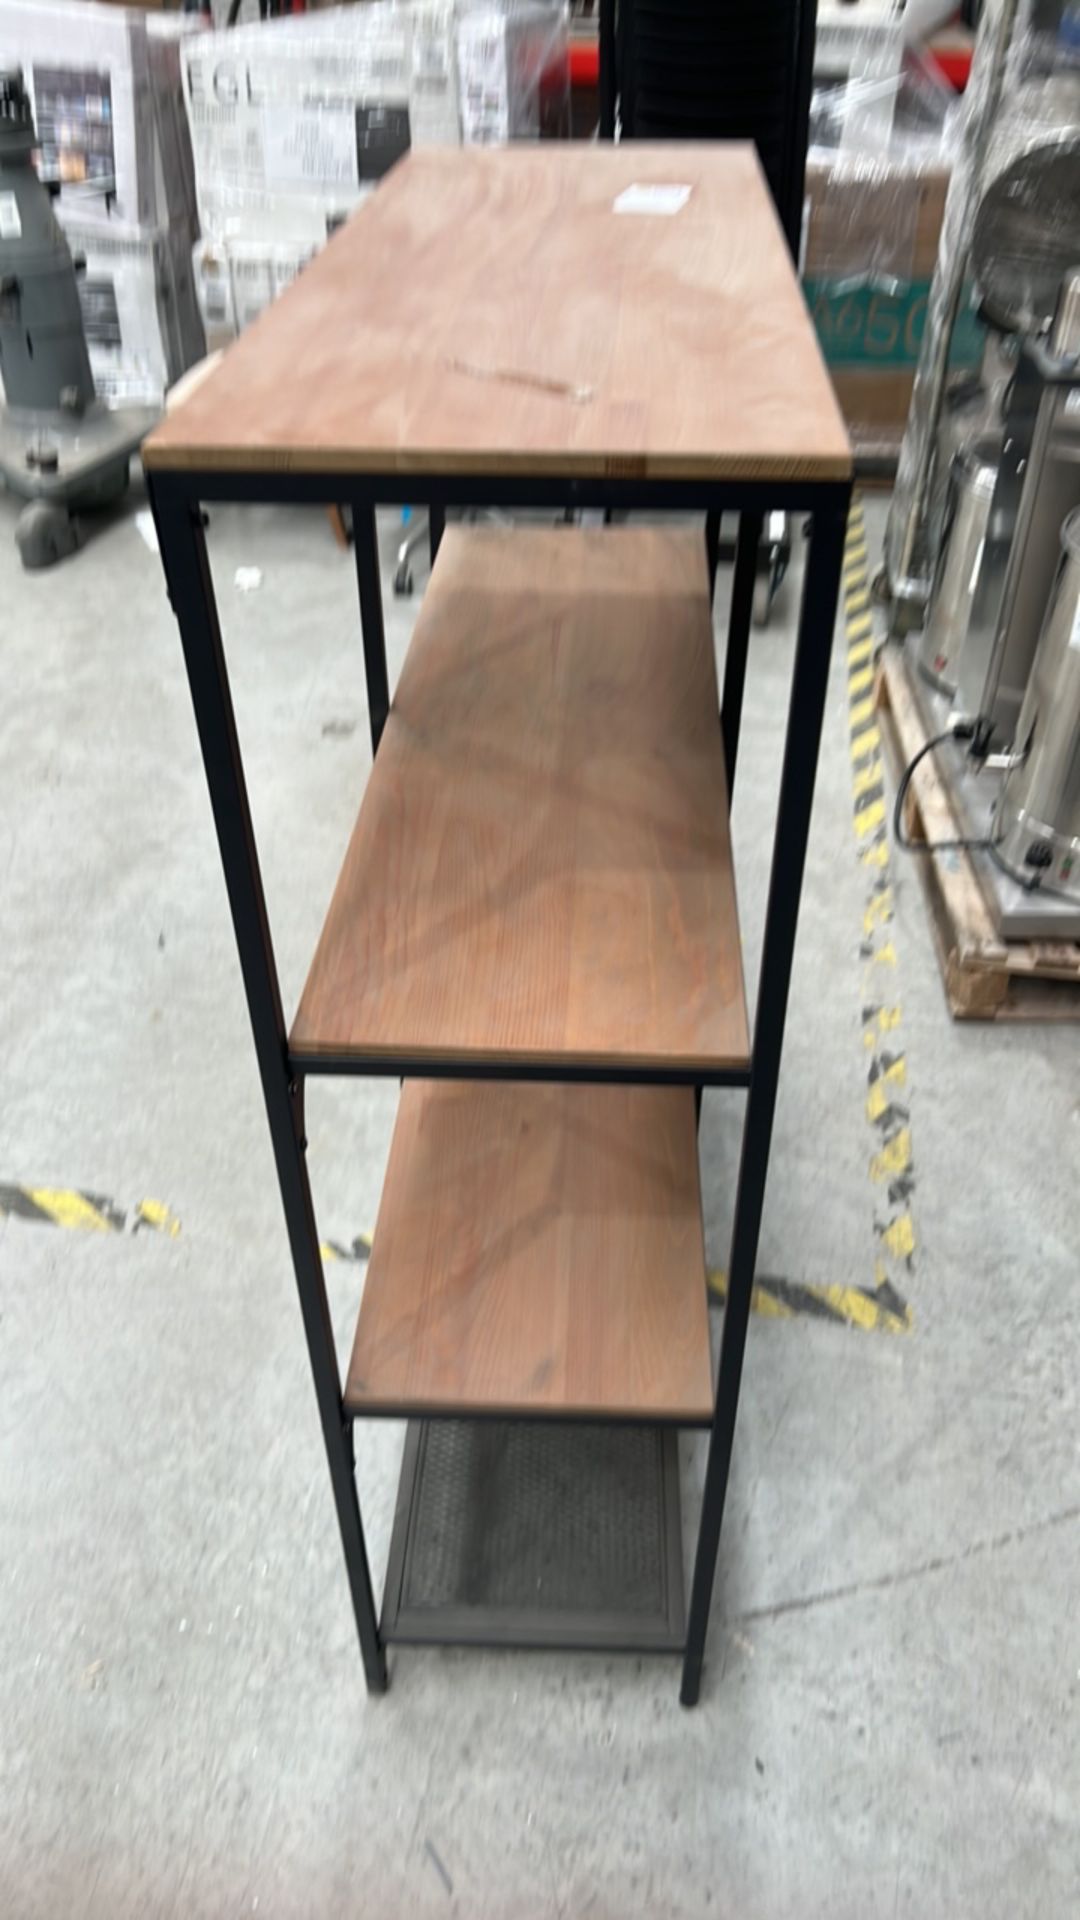 Wood and metal shelving - Image 4 of 6